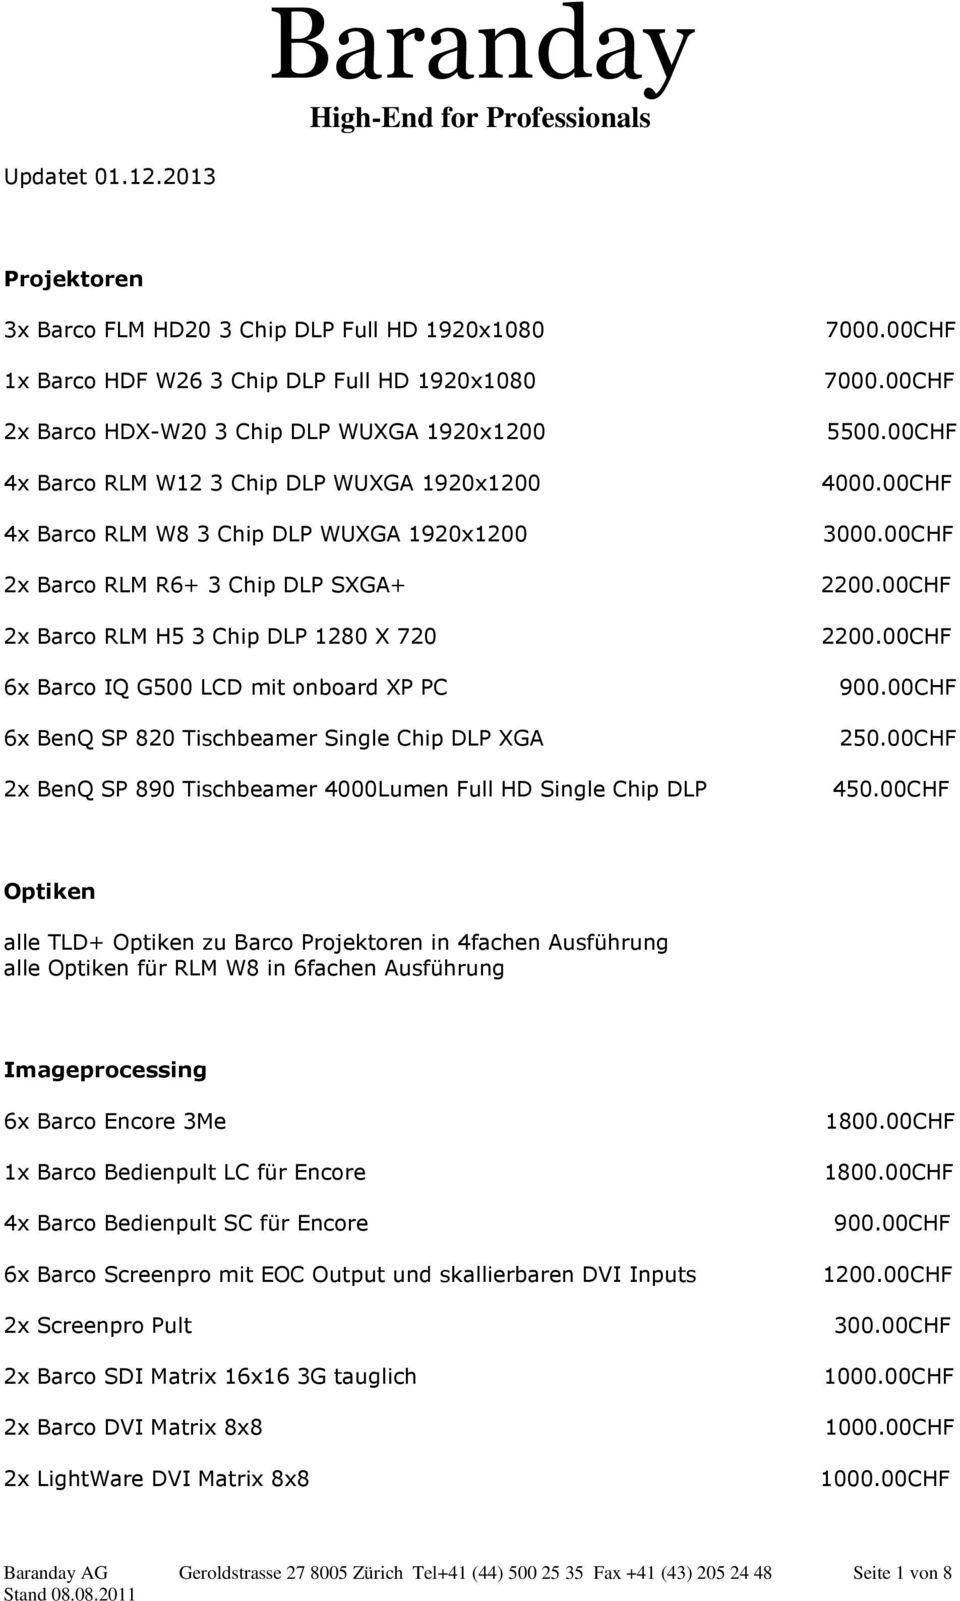 4x Barco RLM W8 3 Chip DLP WUXGA 1920x1200 2x Barco RLM R6+ 3 Chip DLP SXGA+ 2x Barco RLM H5 3 Chip DLP 1280 X 720 6x Barco IQ G500 LCD mit onboard XP PC 6x BenQ SP 820 Tischbeamer Single Chip DLP